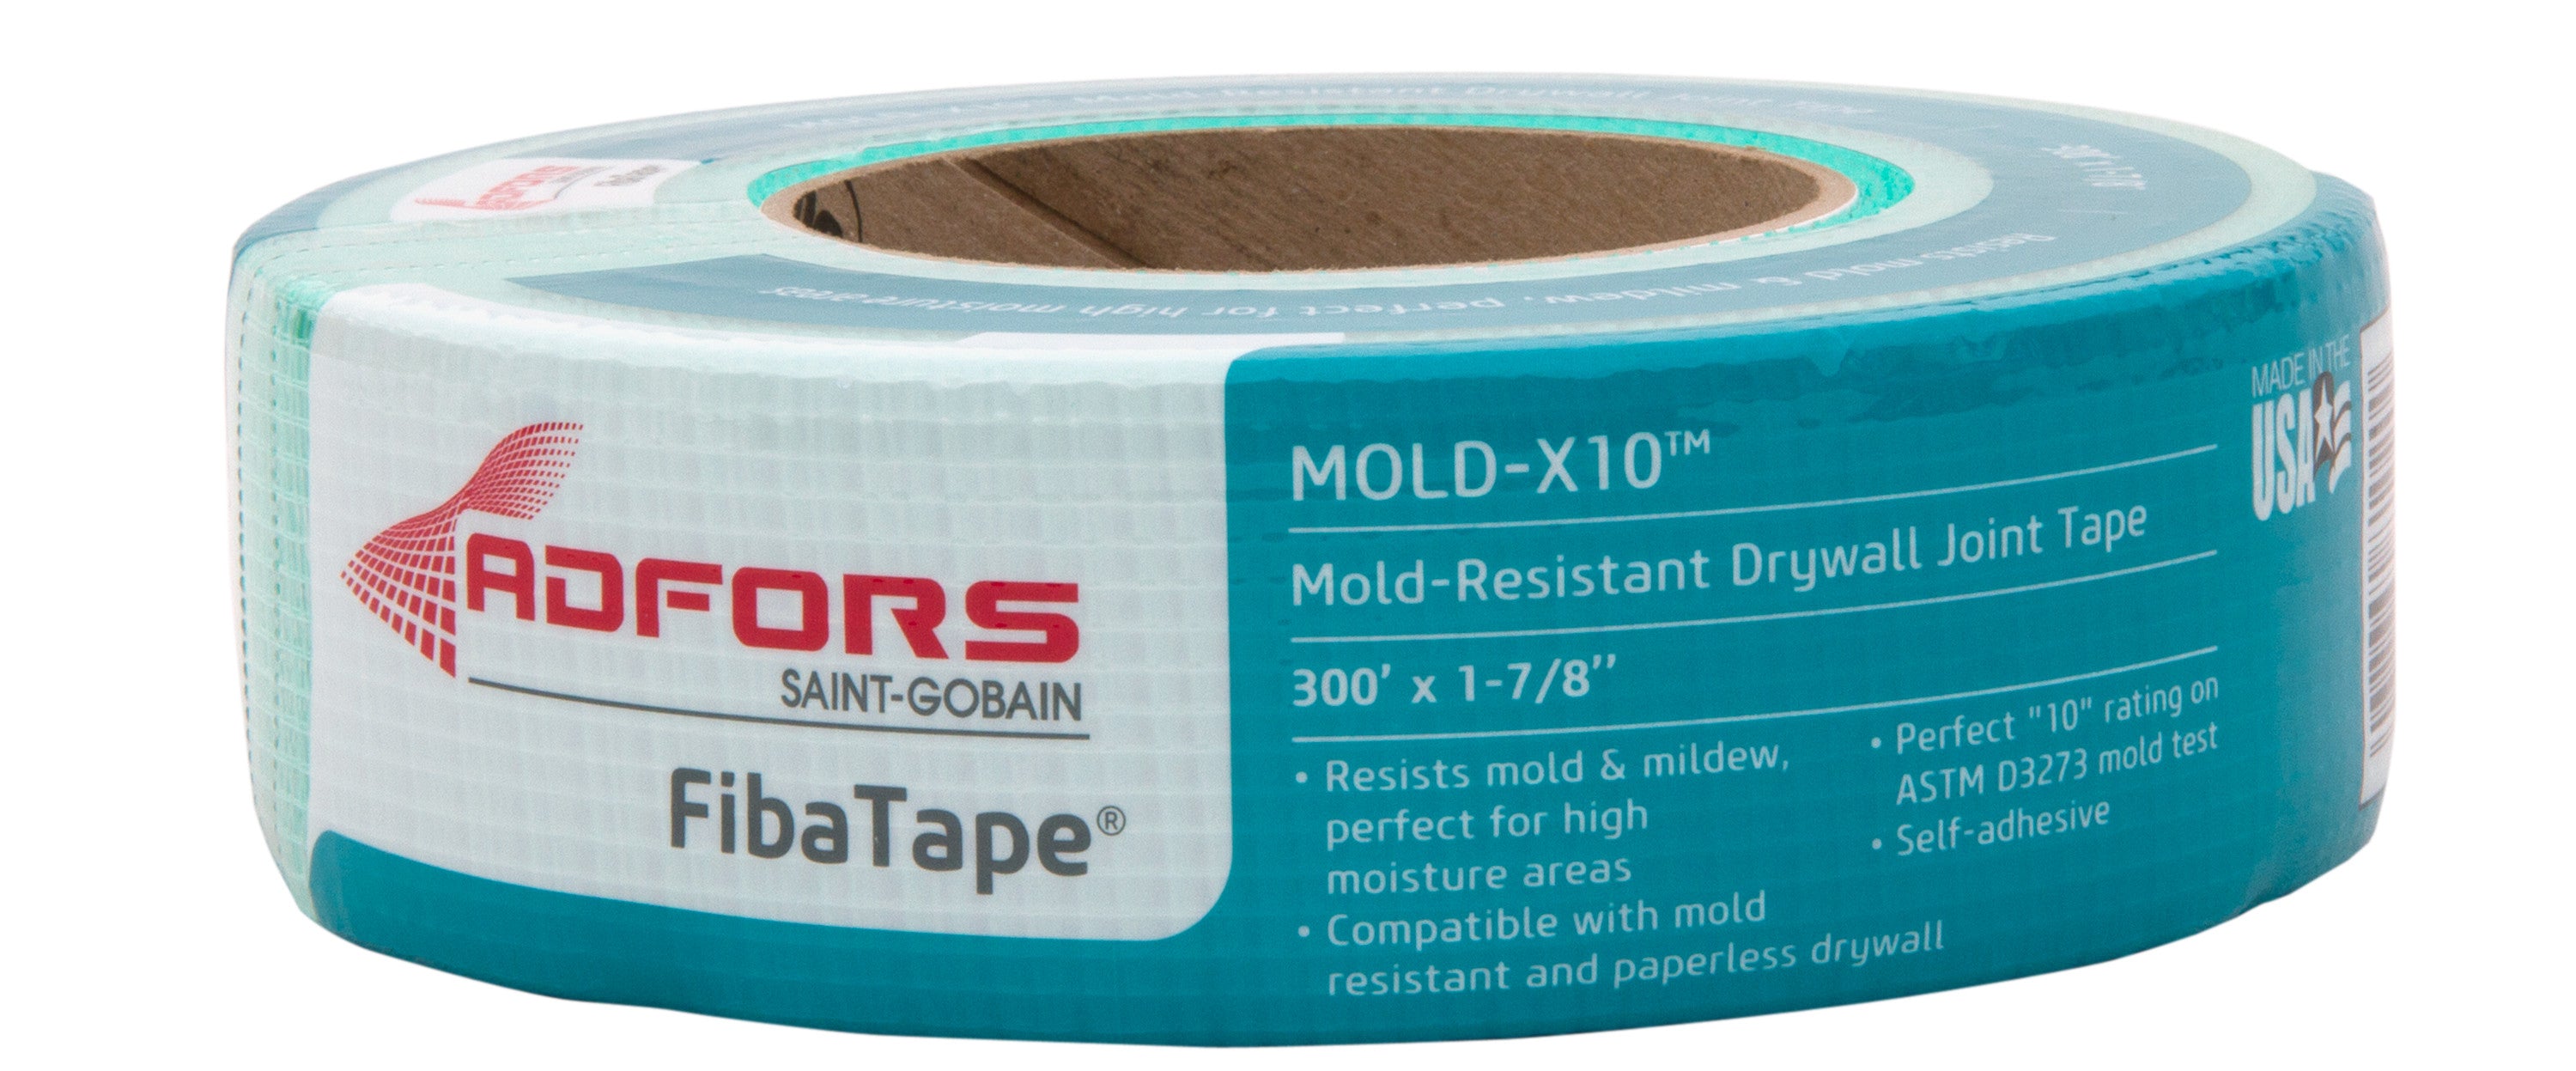 FibaTape Mold-X10 Mold-Resistant Drywall Tape (1-7/8-in x 300-ft)